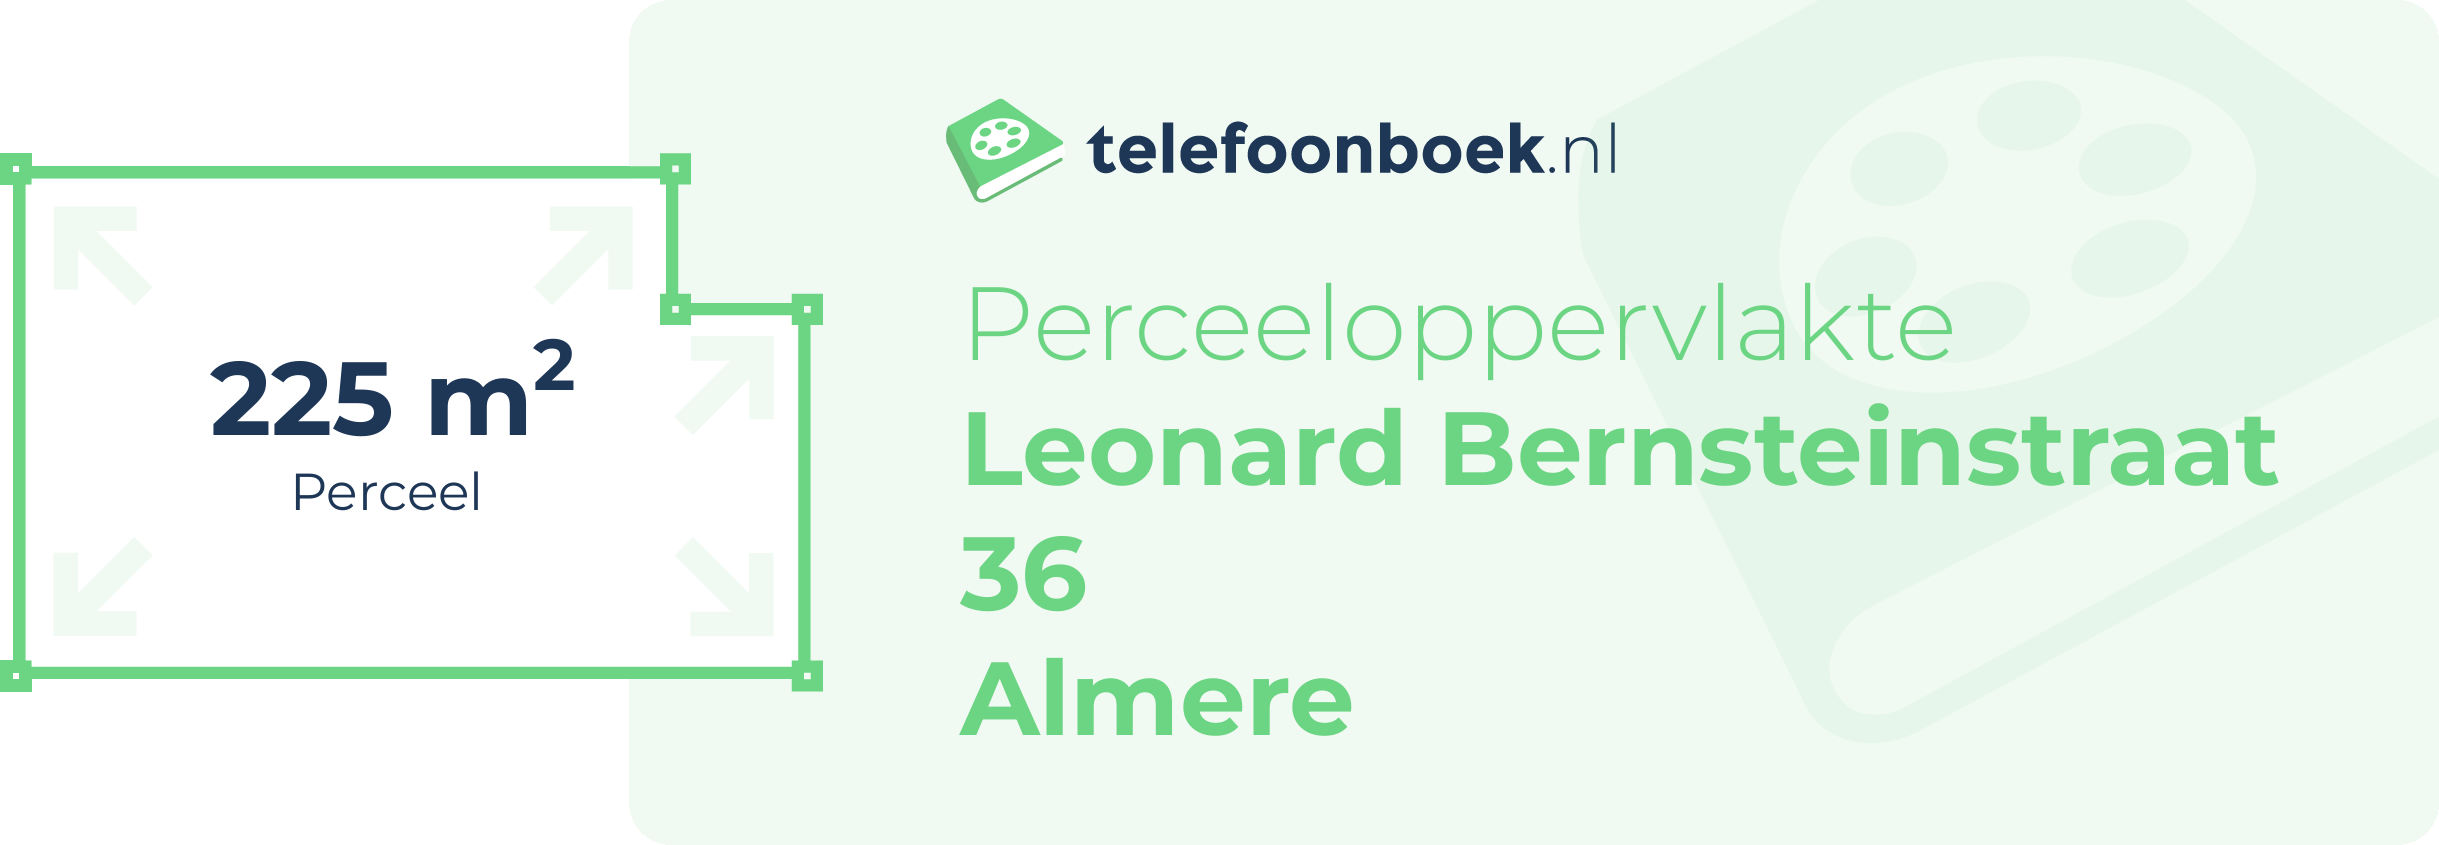 Perceeloppervlakte Leonard Bernsteinstraat 36 Almere